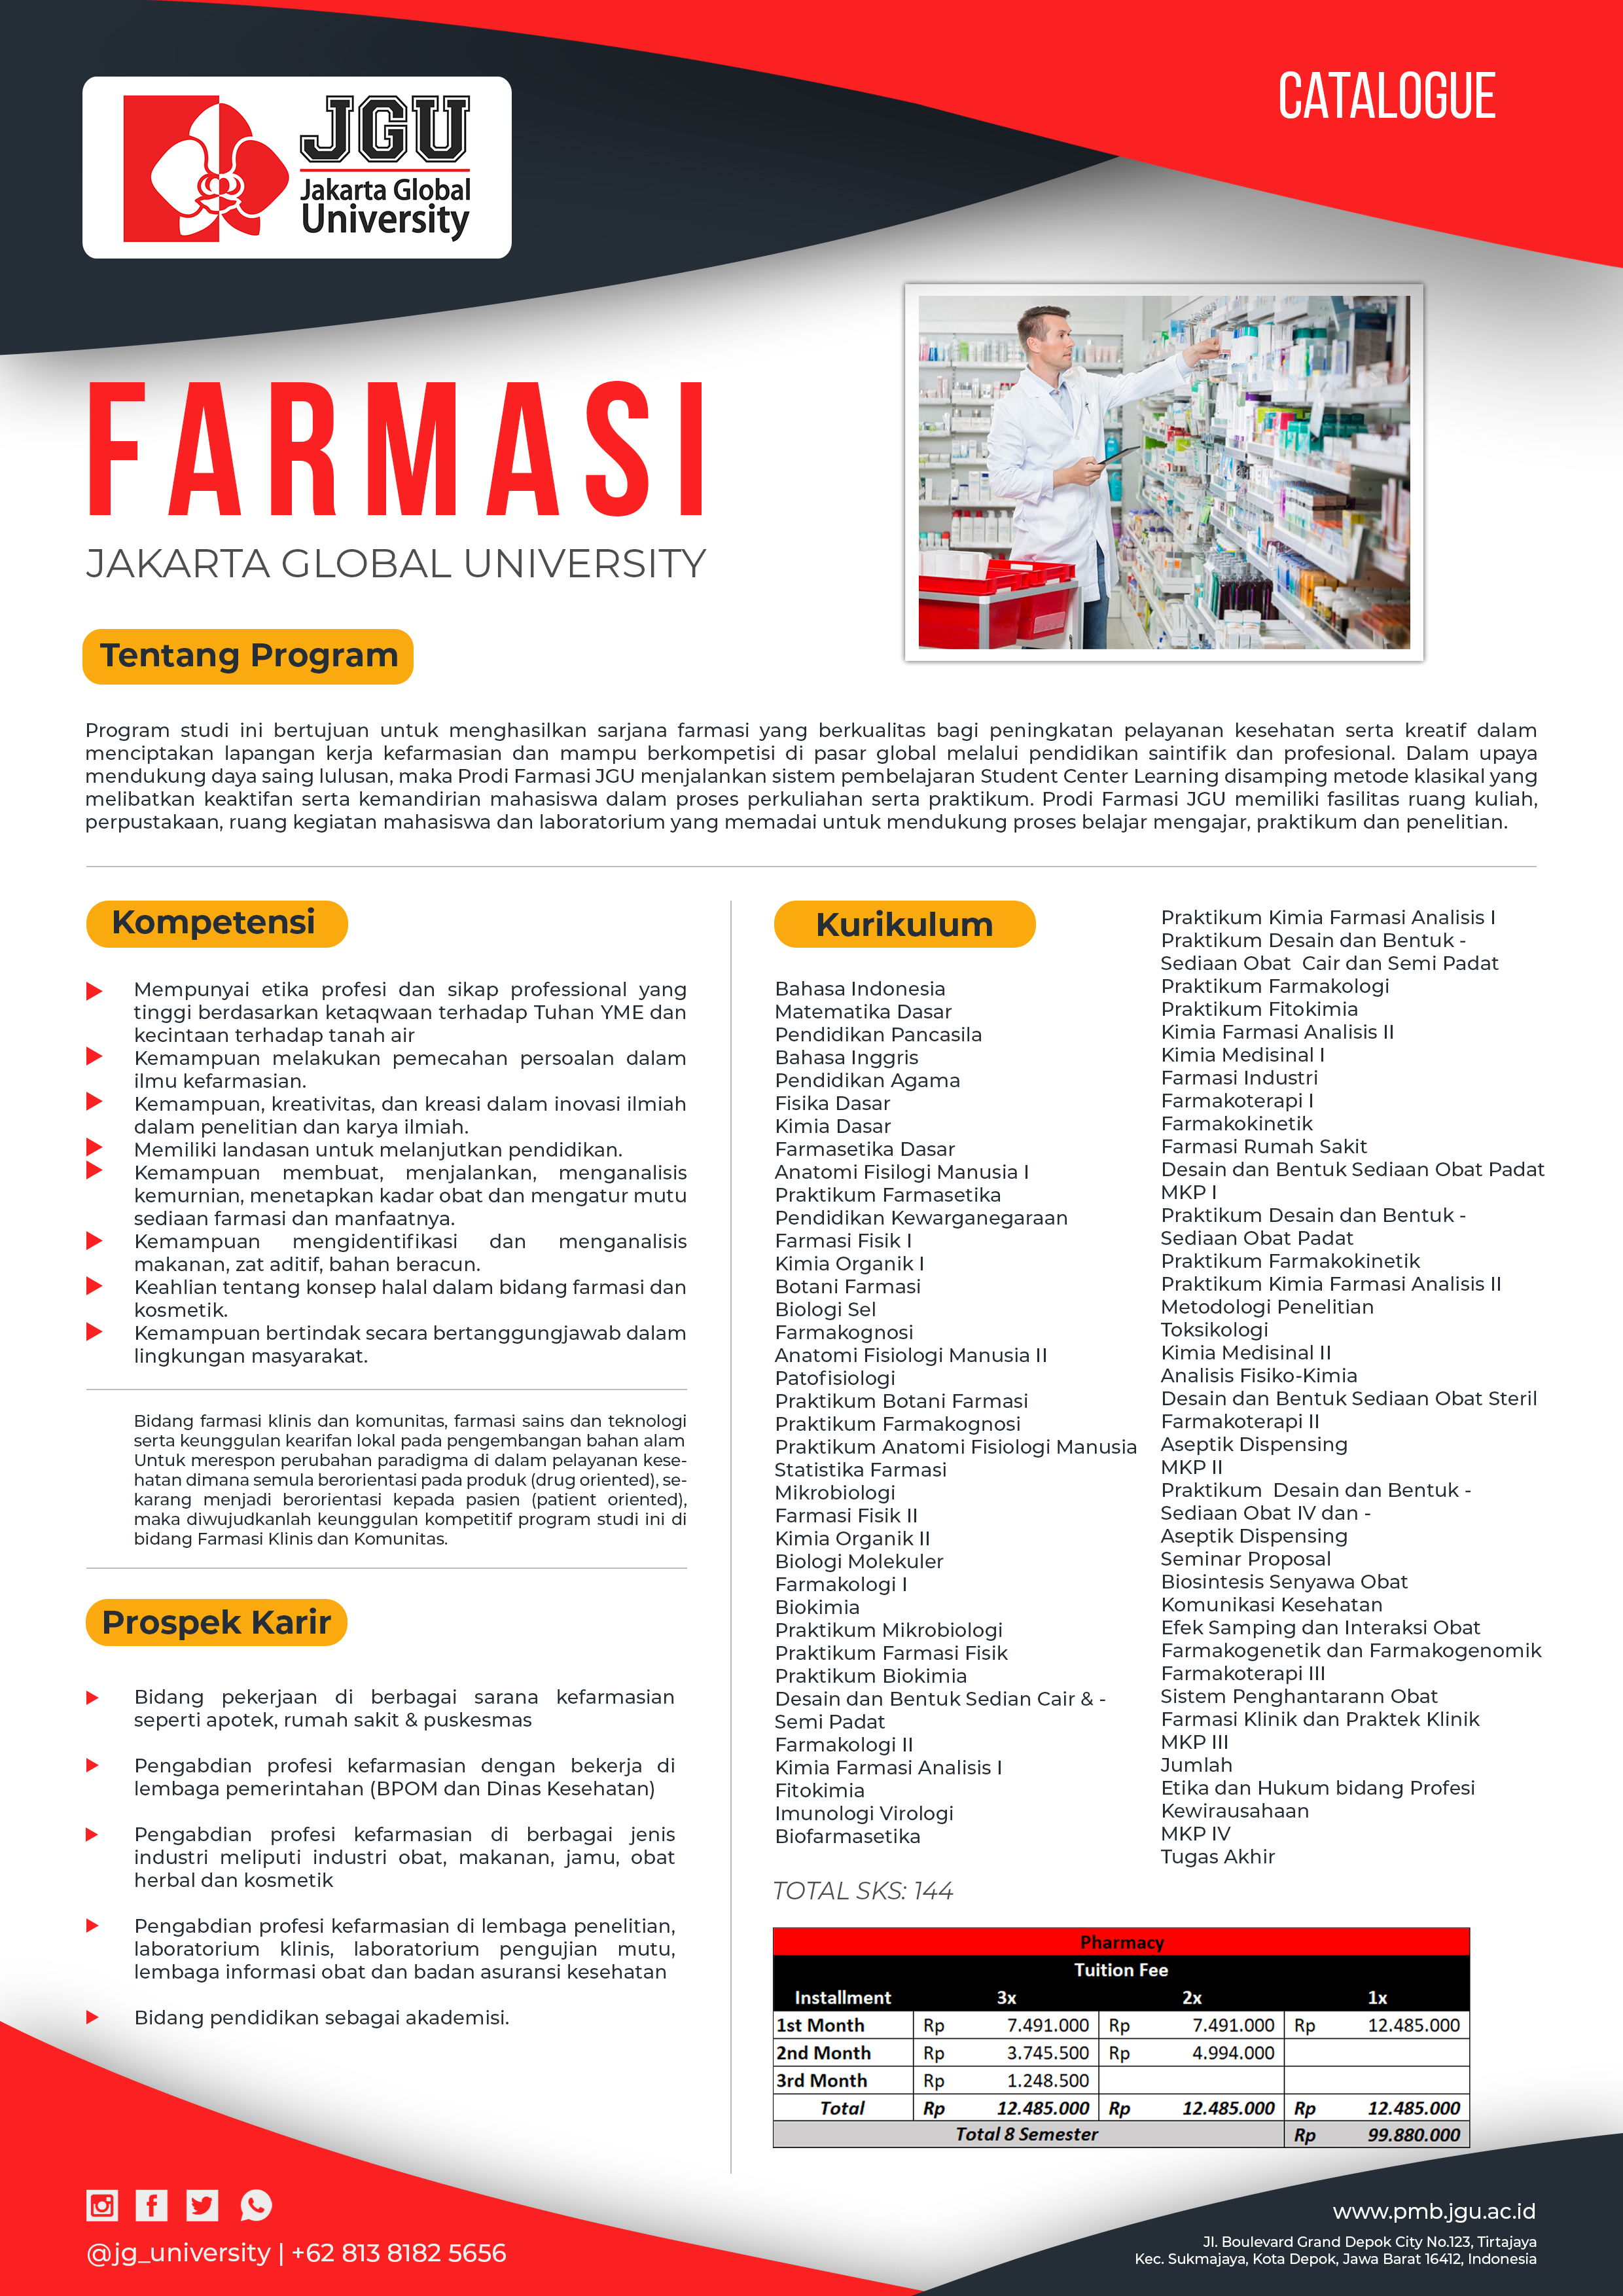 Farmasi - Jakarta Global University